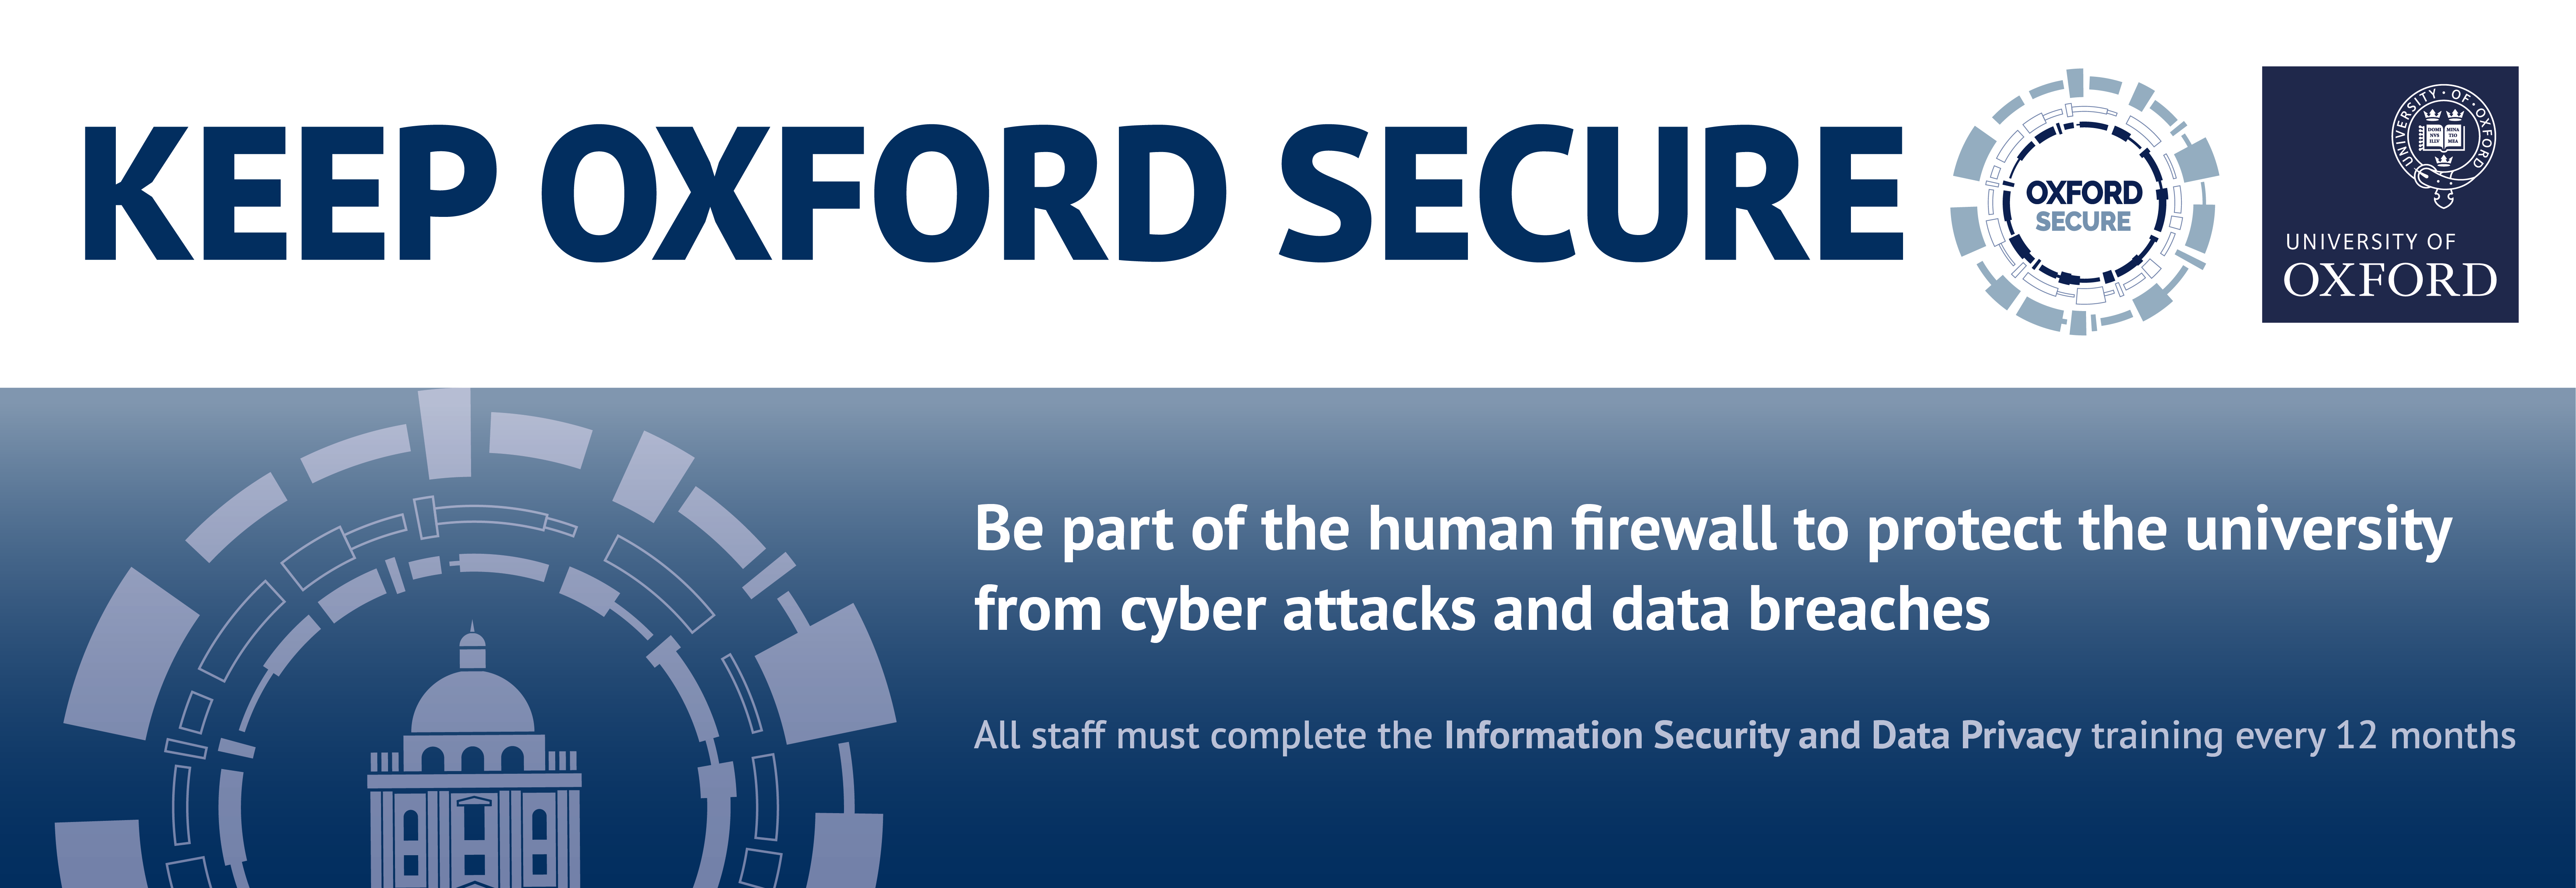 oxford secure website blue